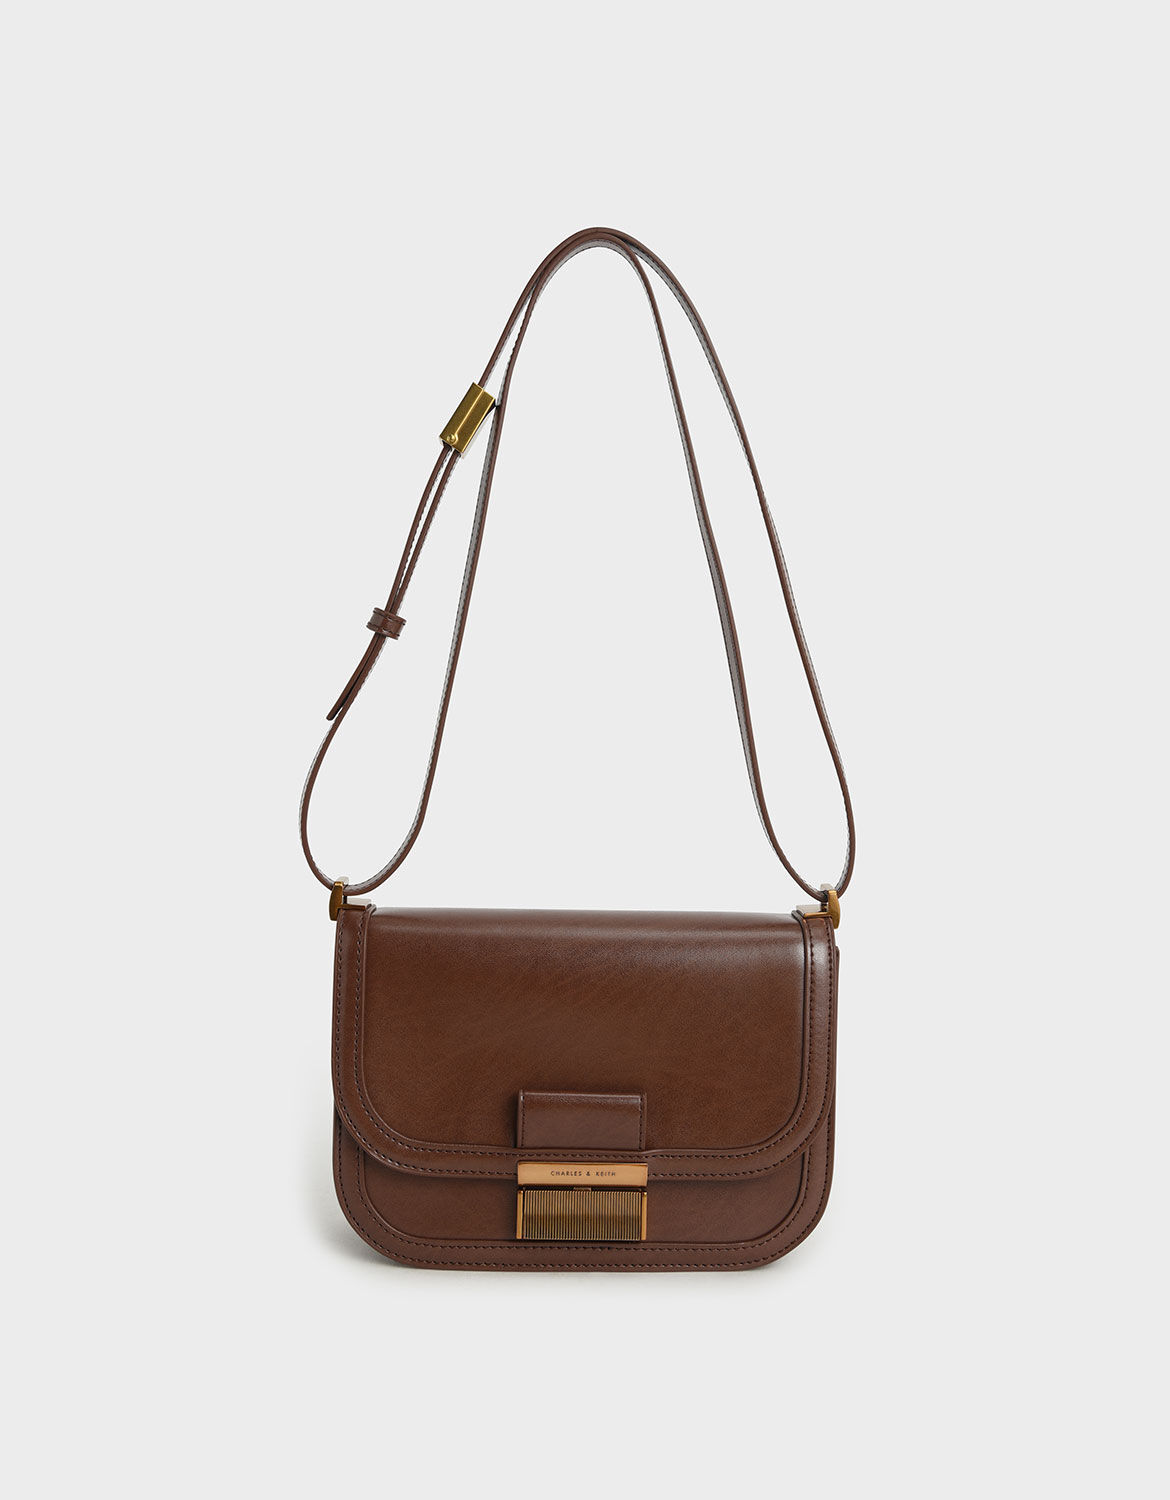 Charles & Keith - Women's Charlot Bag, Brick, S